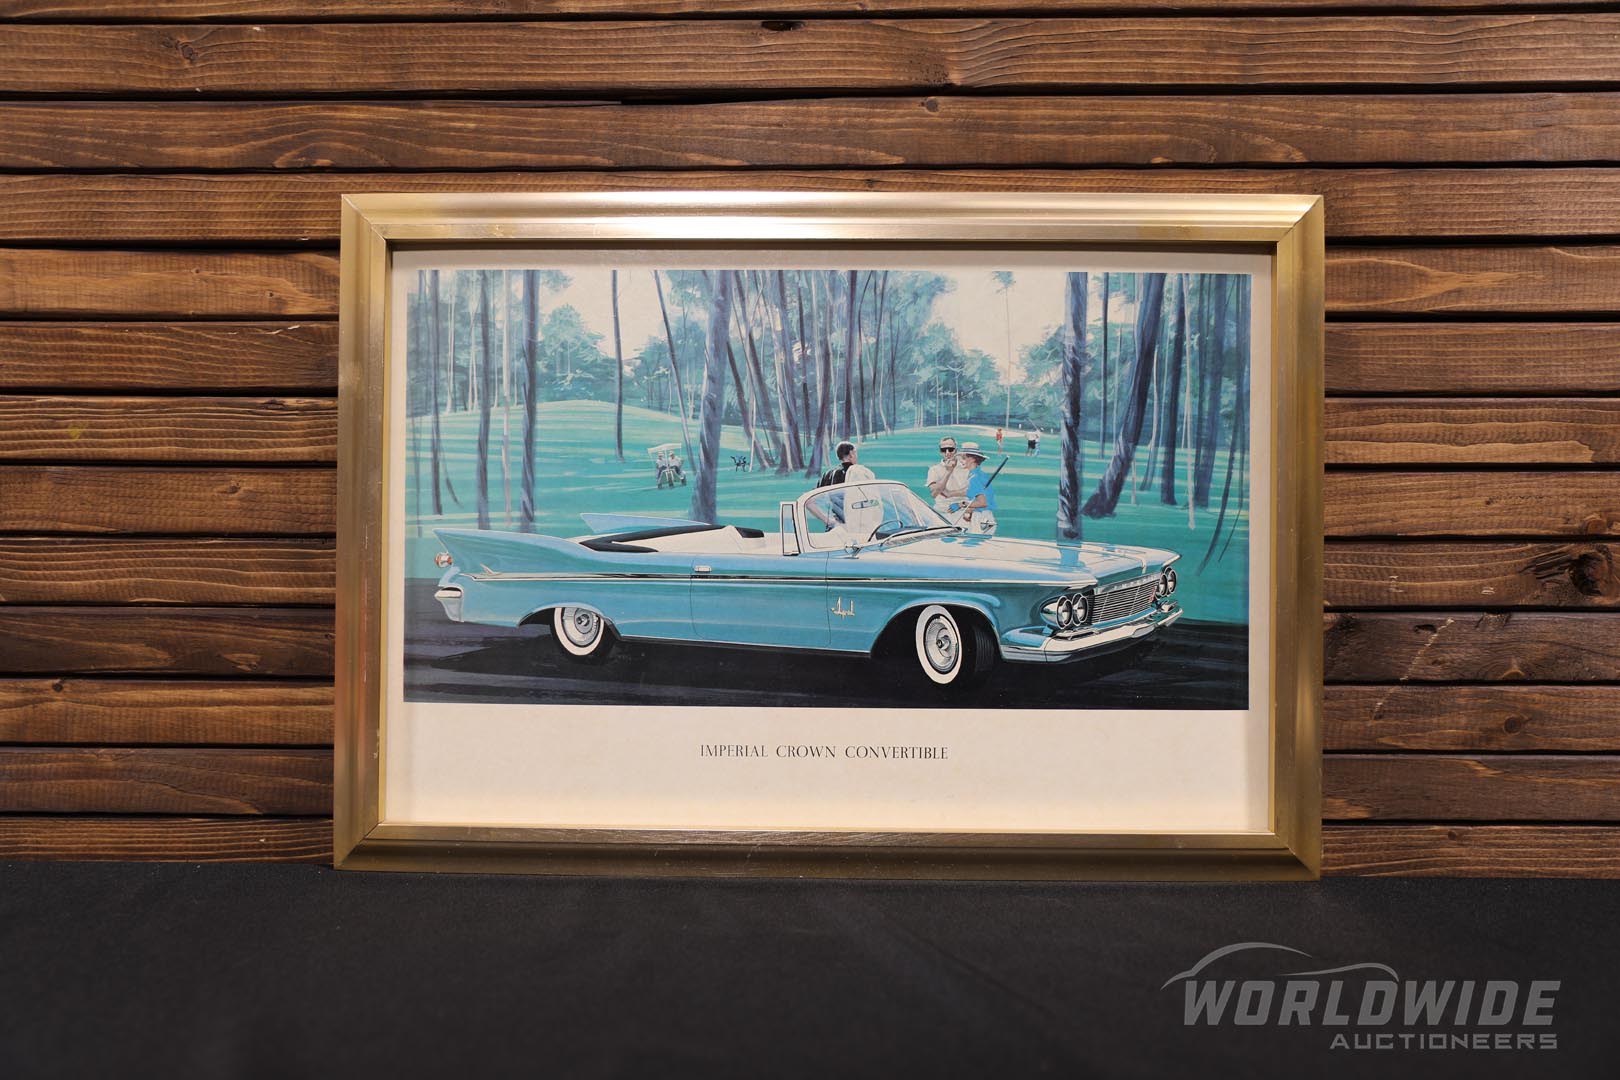  1961 Imperial Crown Convertibl e Dealer Artwork - Framed 